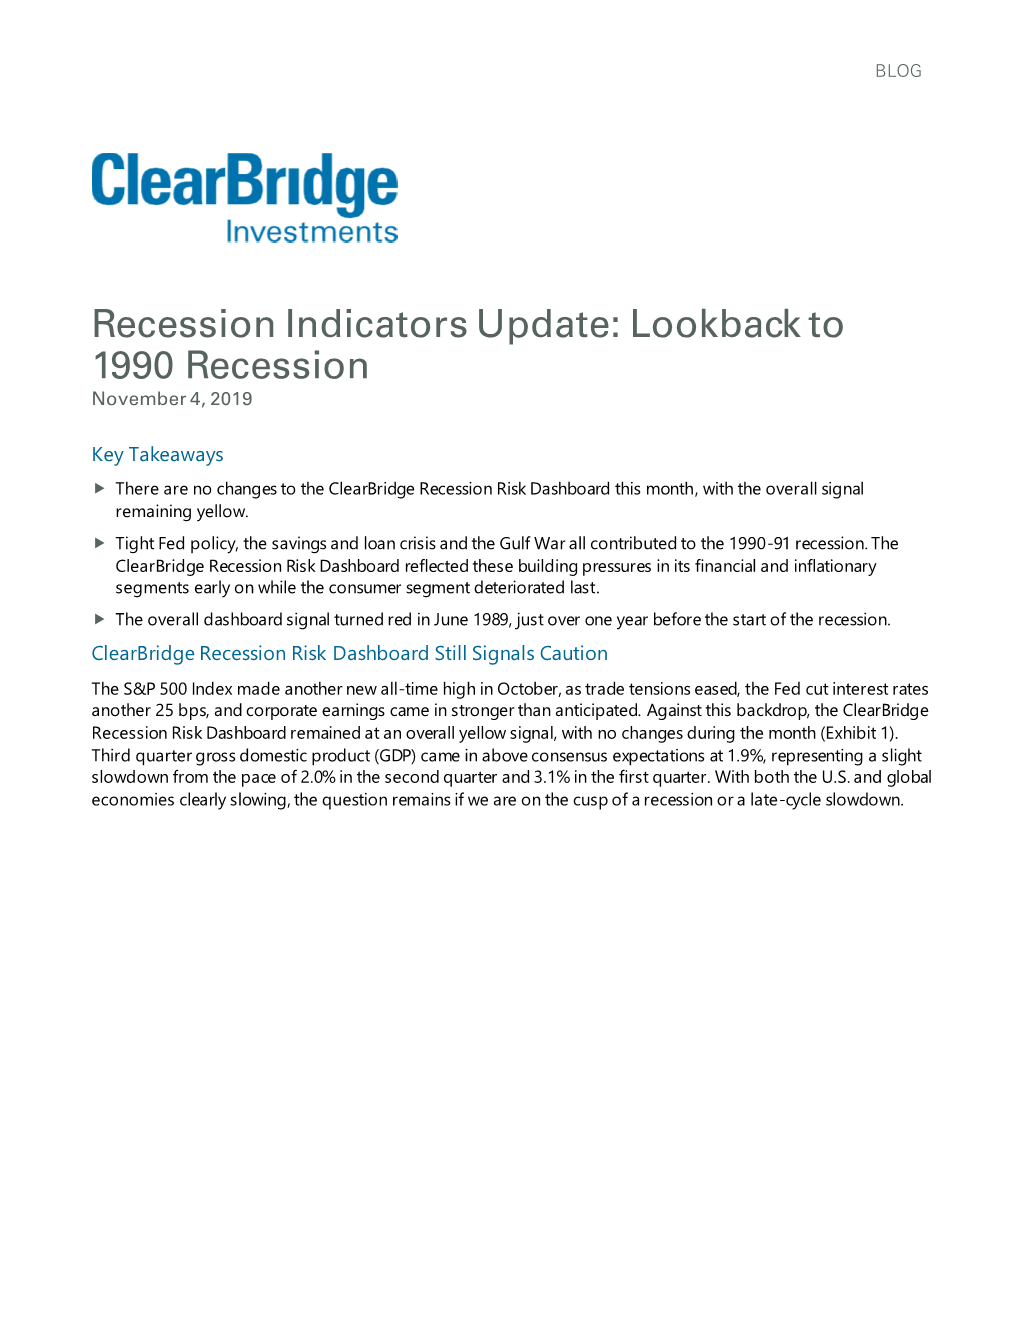 Lookback to 1990 Recession November 4, 2019